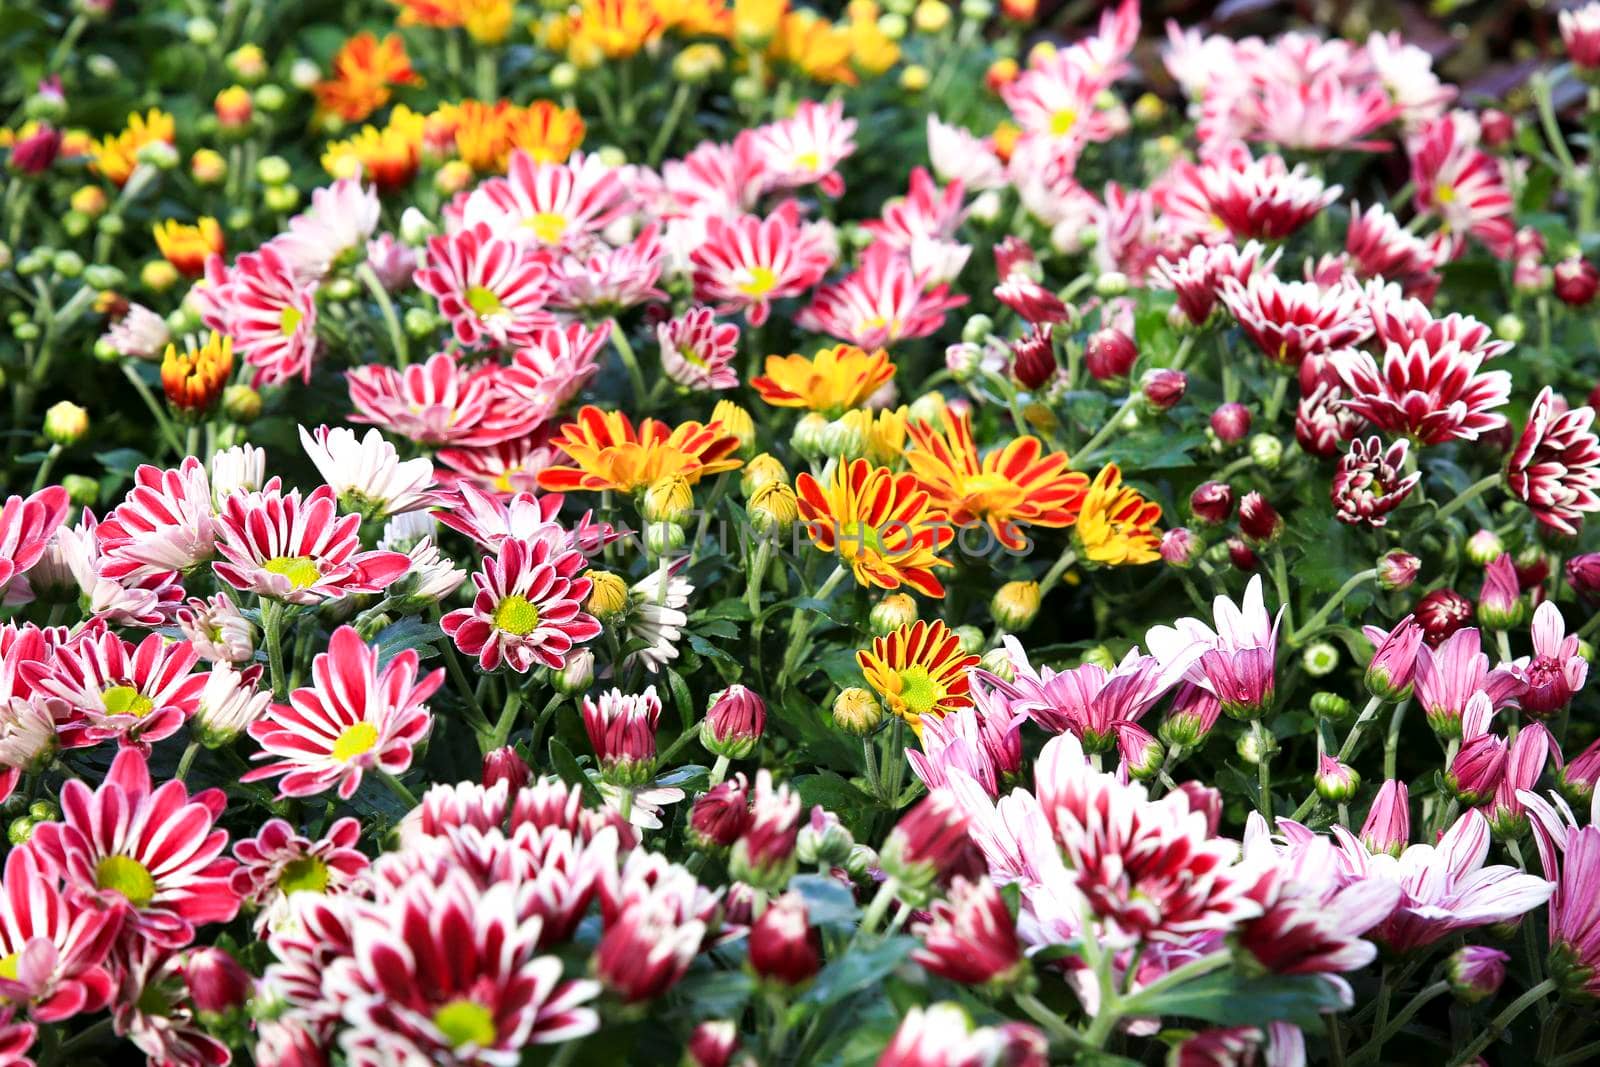 Colorful Chrysanthemum indicum plants in the garden under the sun